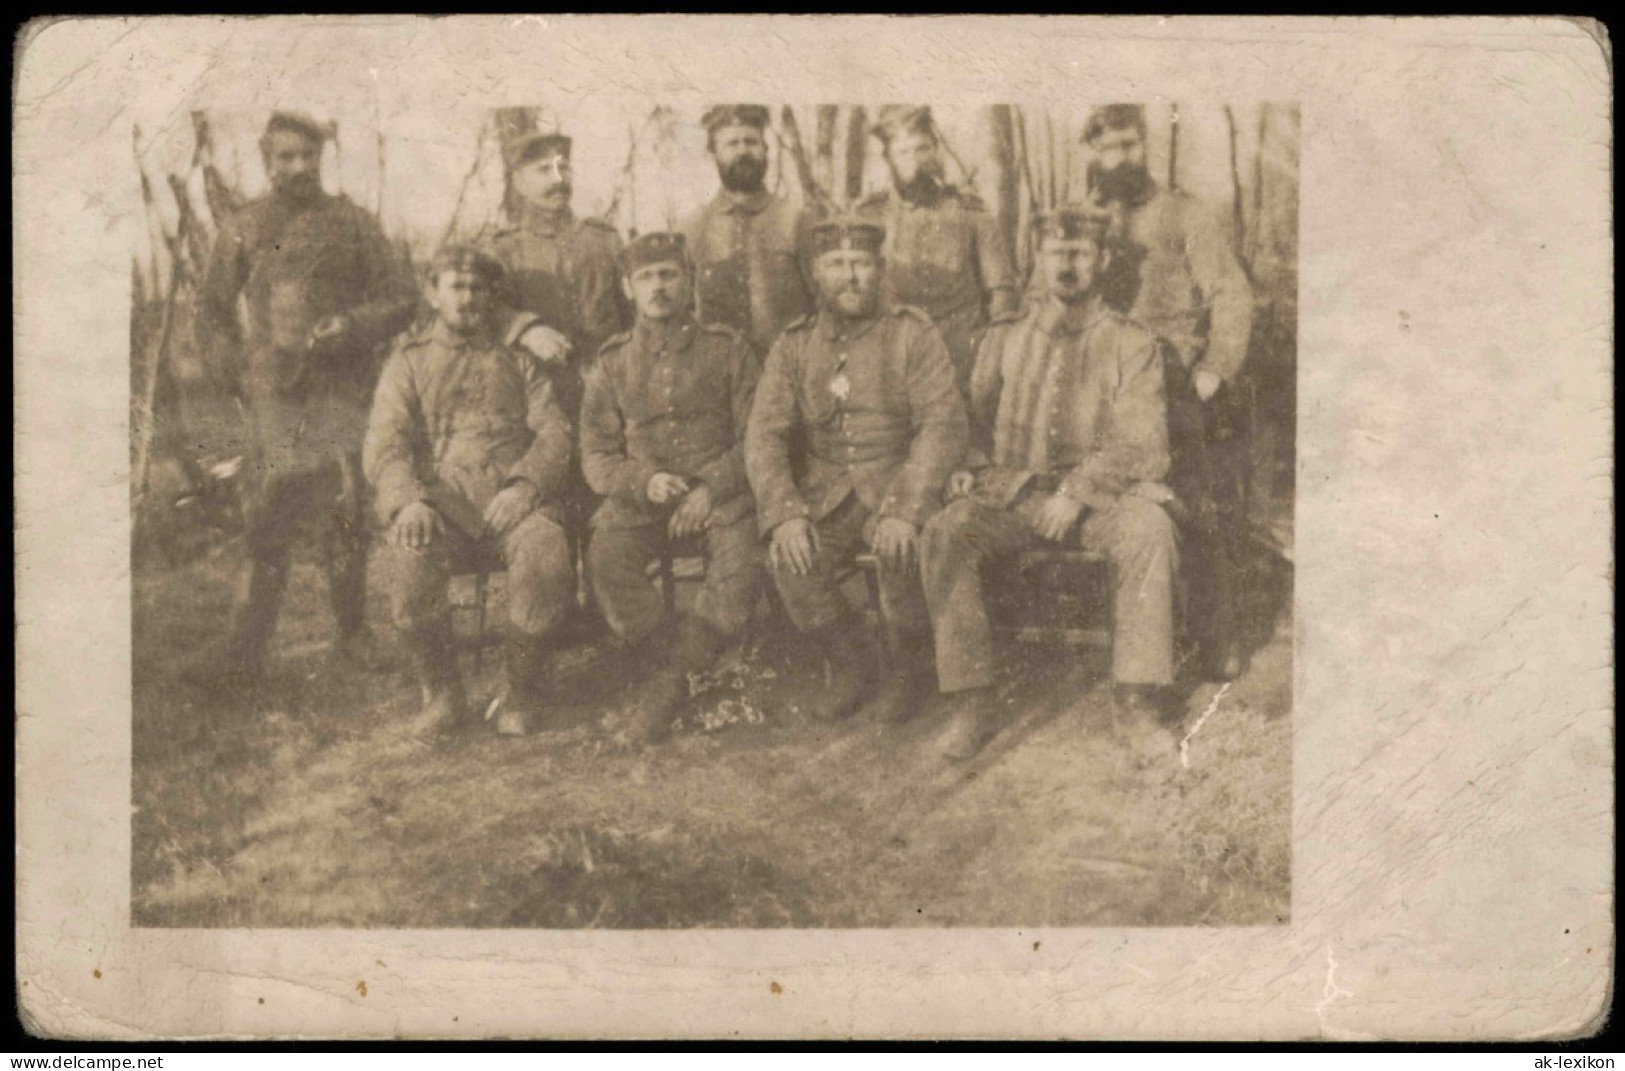 Ansichtskarte  Militär/Propaganda 1.WK (Erster Weltkrieg) Gruppenbild 1915 - War 1914-18